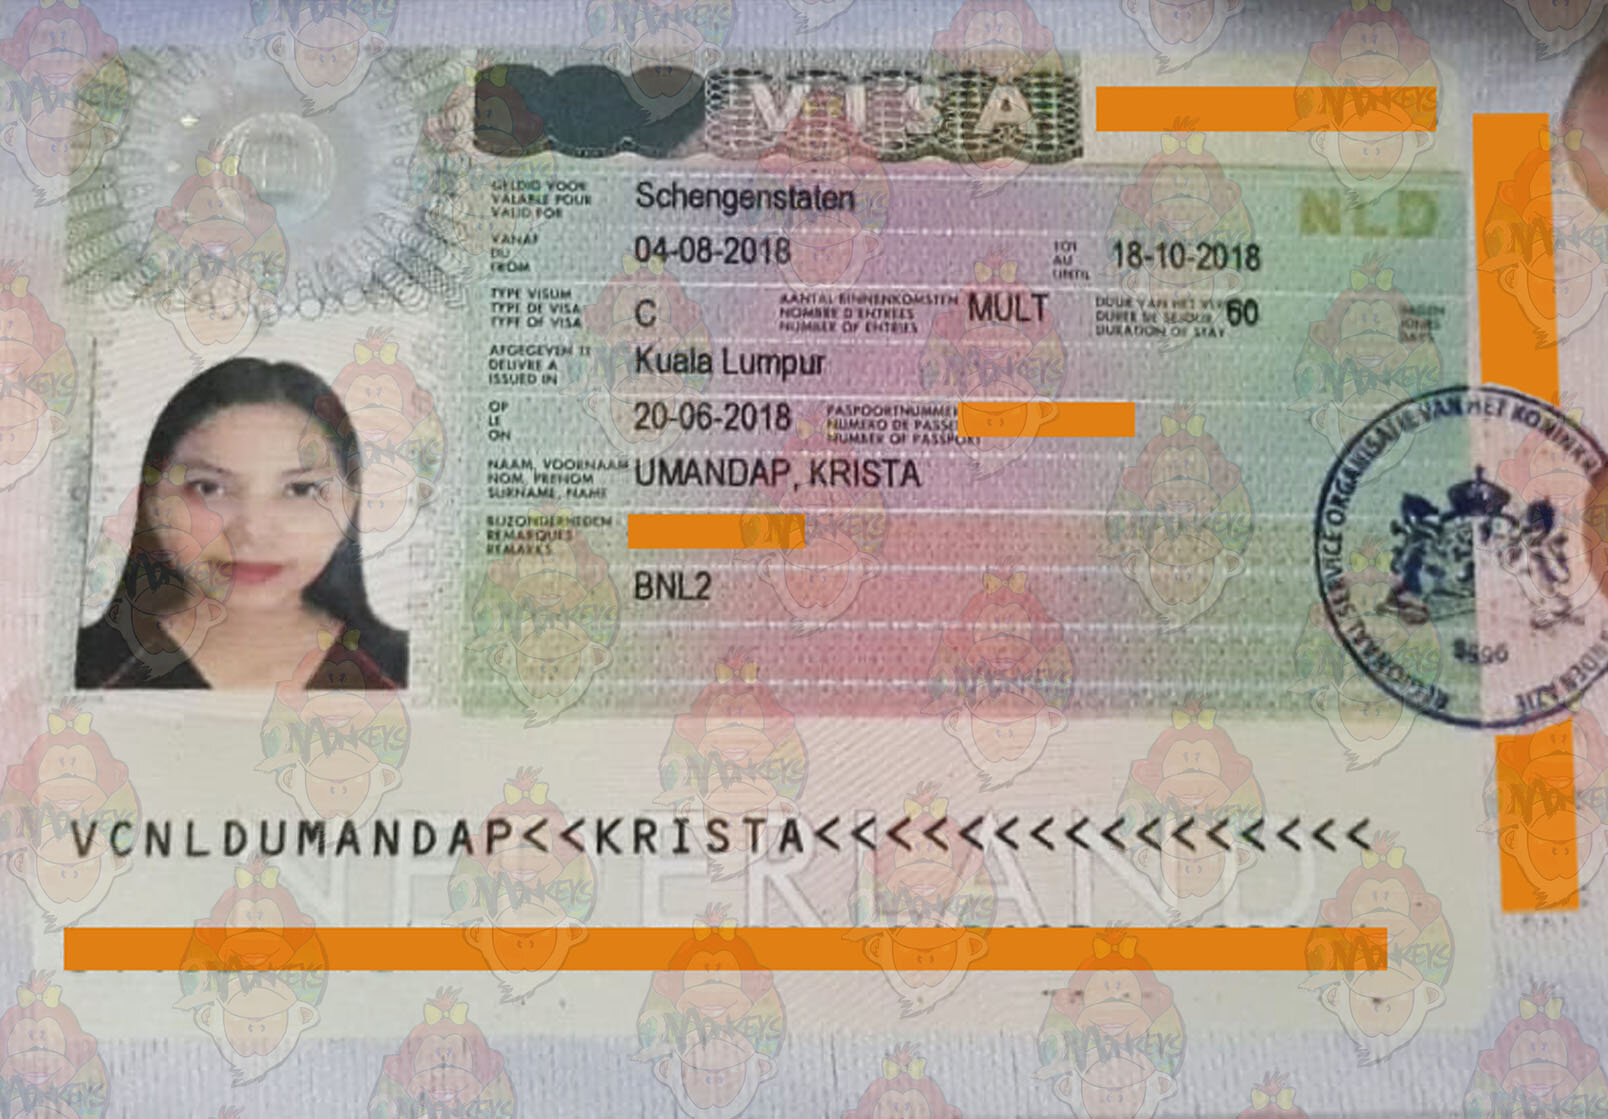 How To Apply For Netherlands Schengen Visa With Philippines Passport